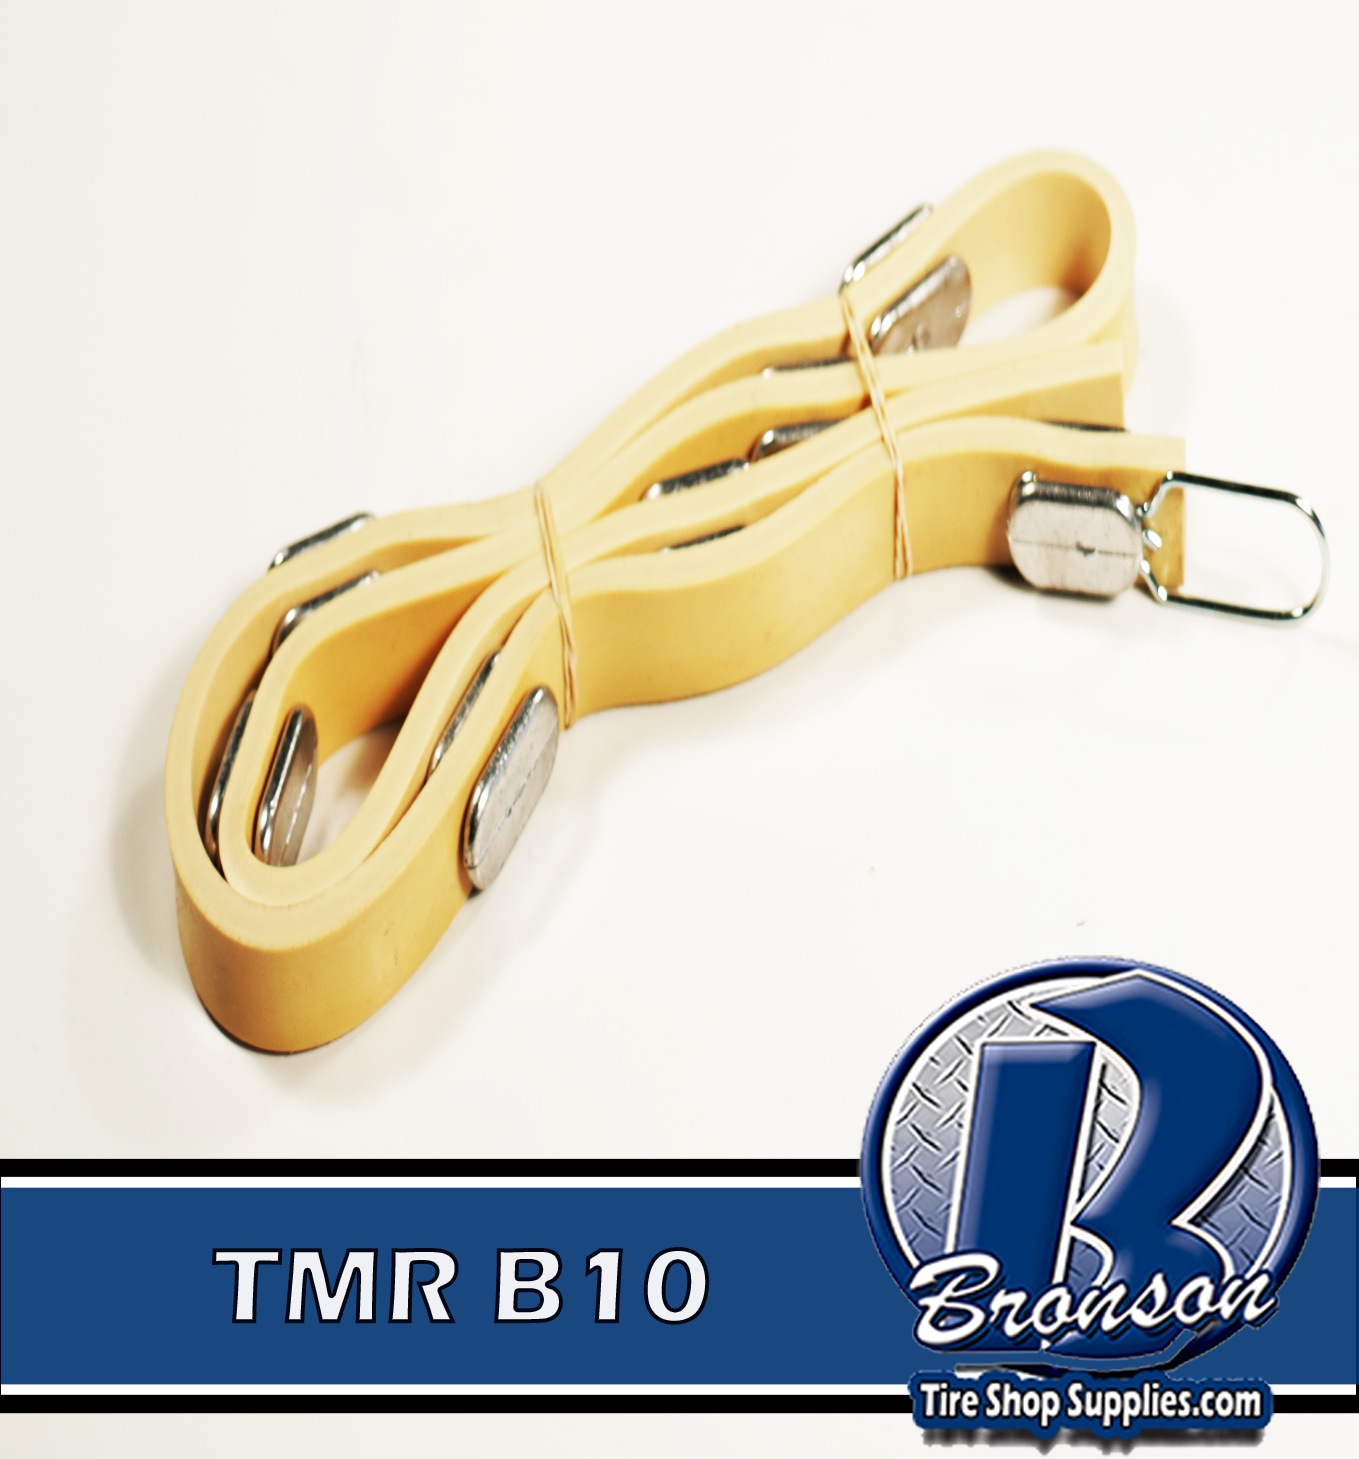 TMR B10 Rubber Rotor Sile